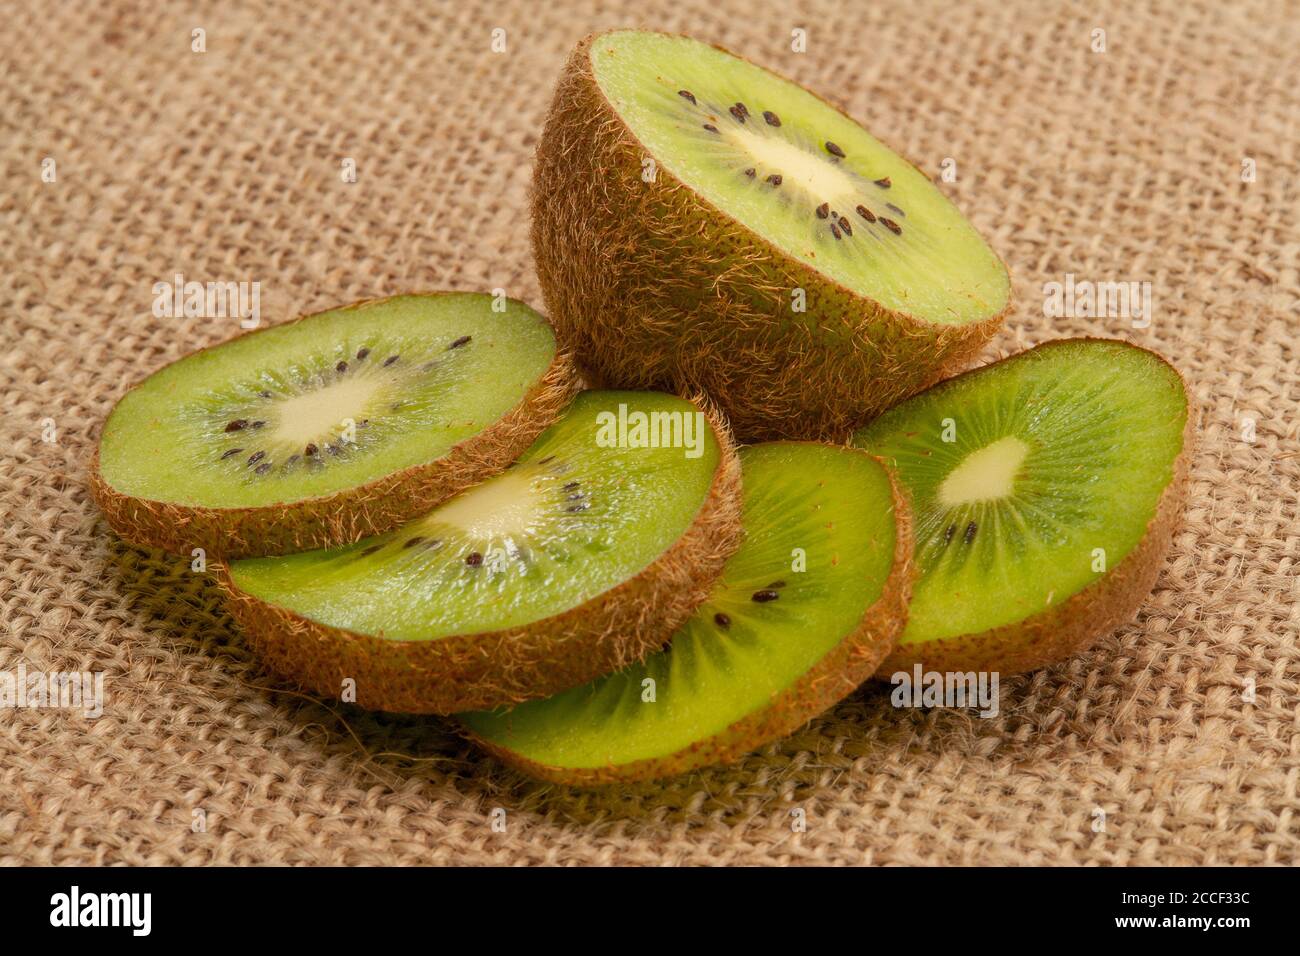 Sliced Kiwi Fruits On Sackcloth Stock Photo